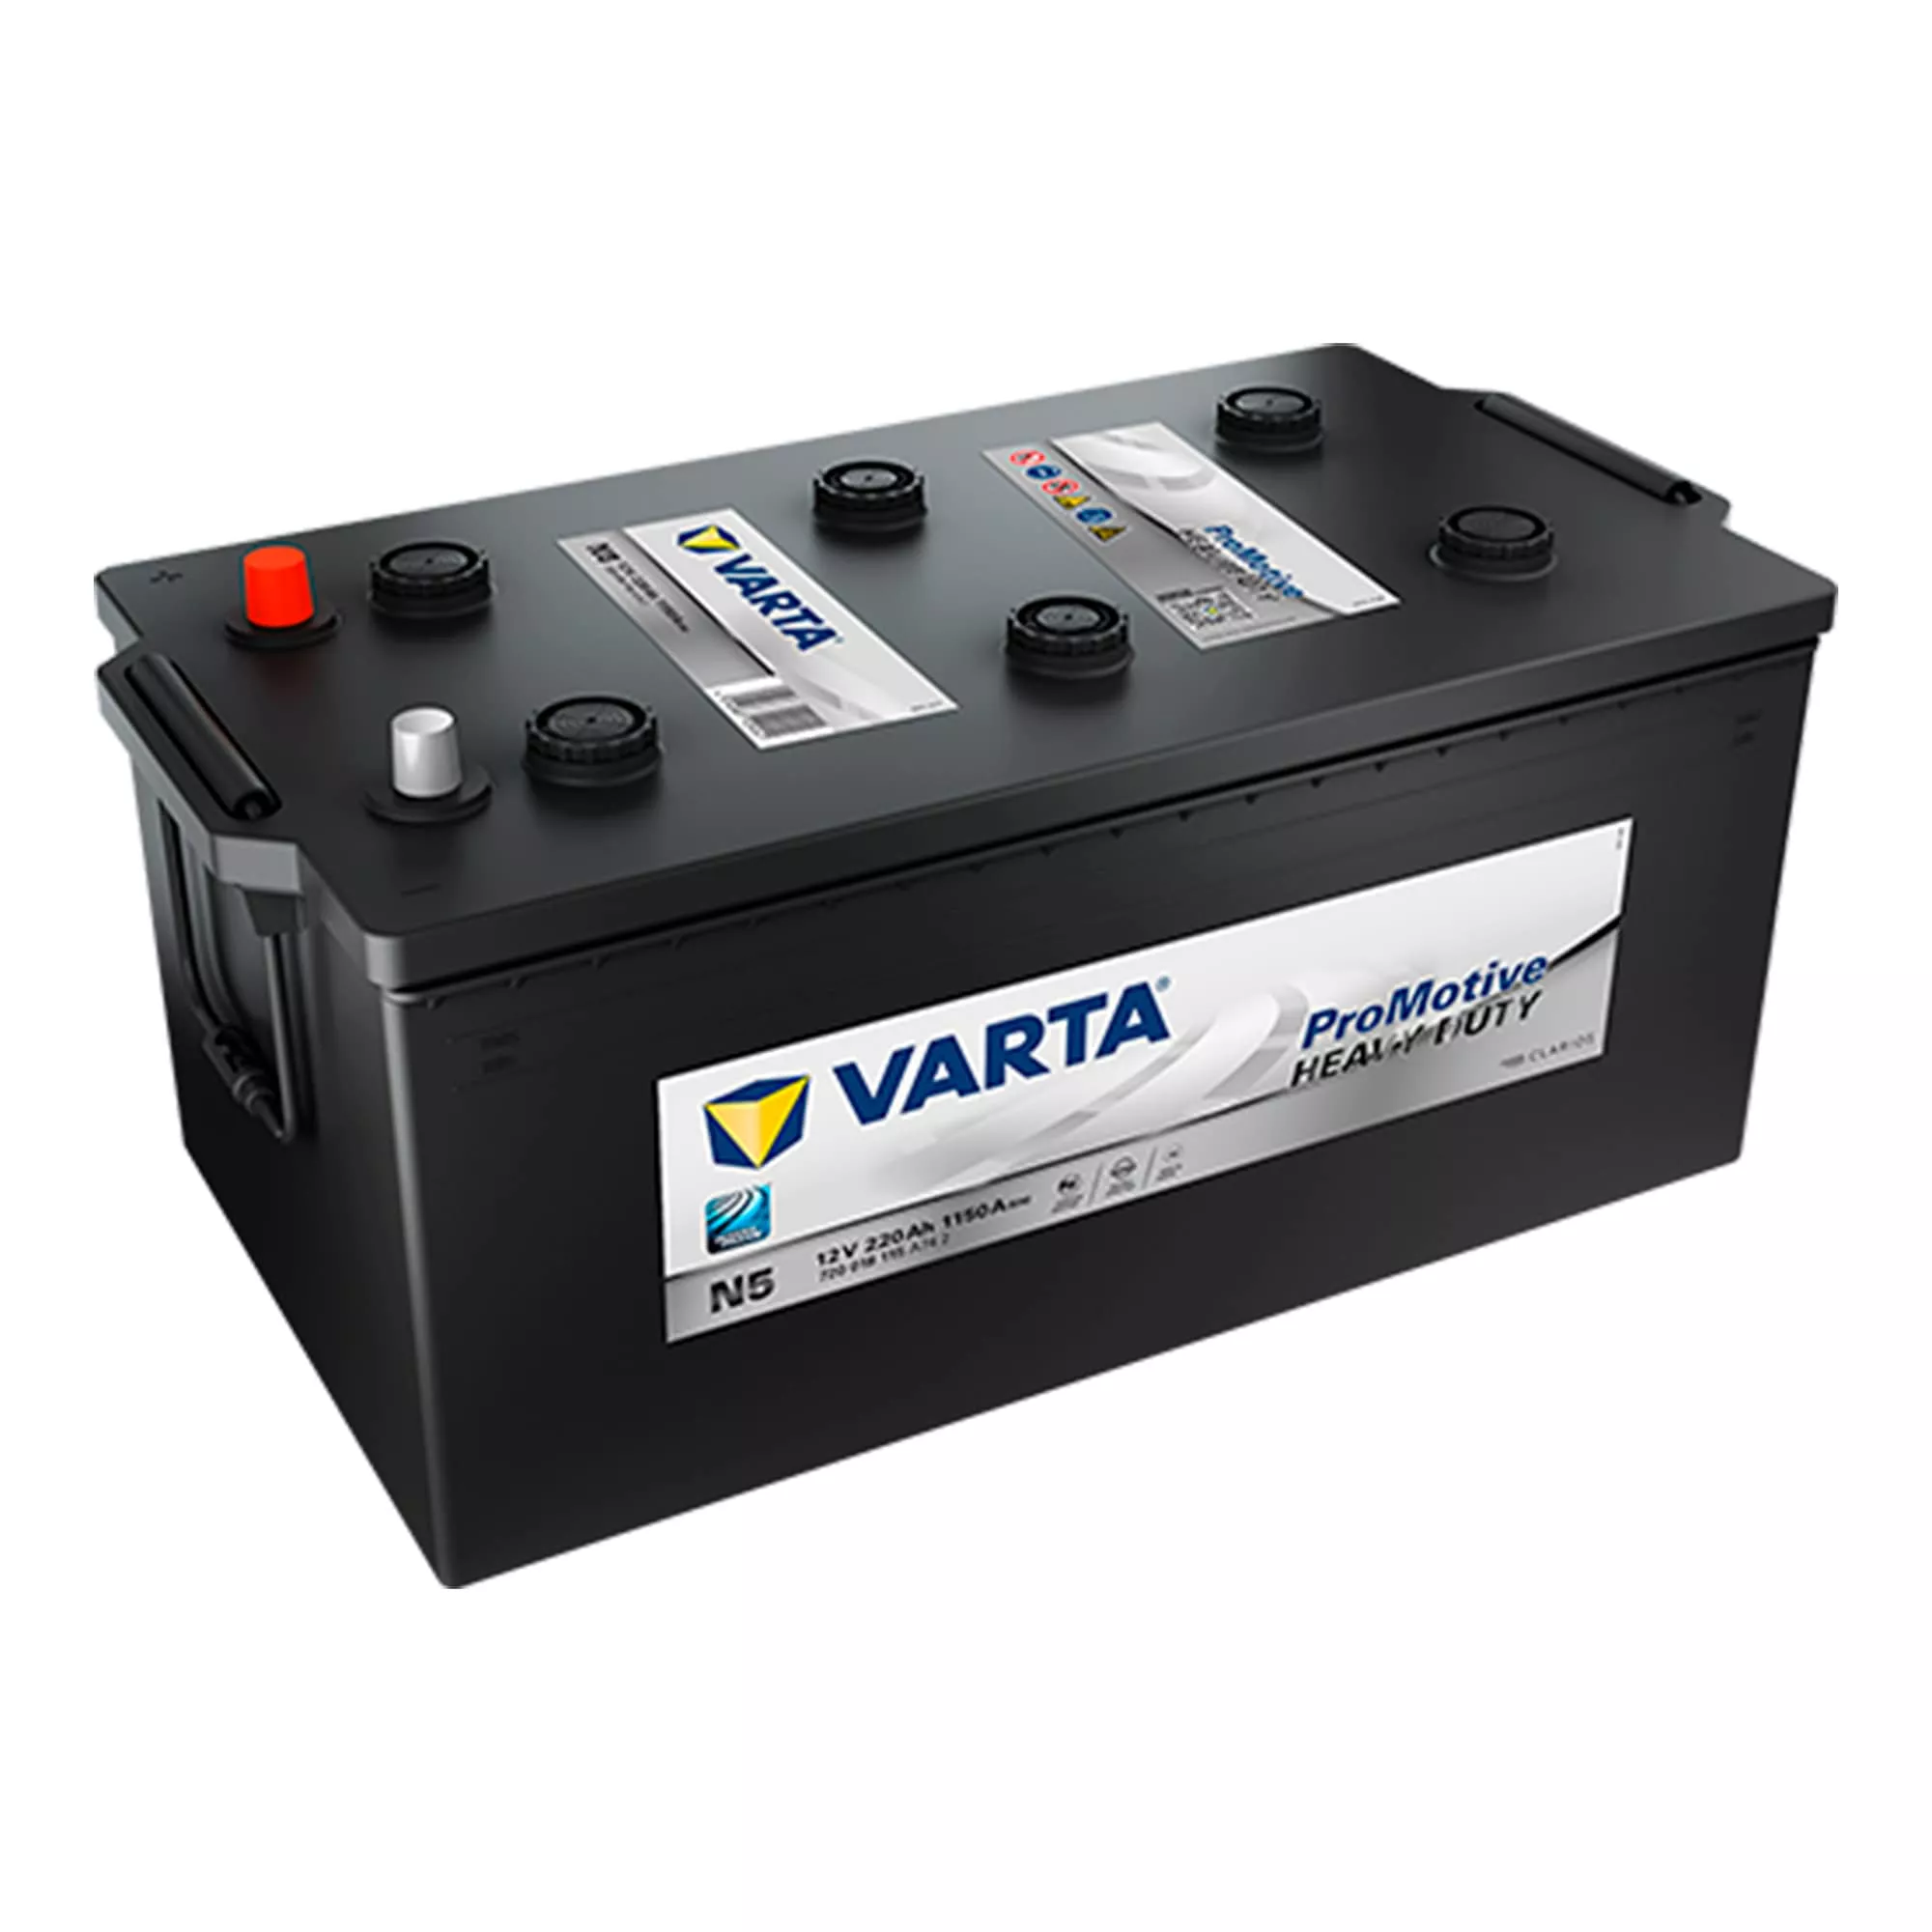 Грузовой аккумулятор Varta Promotive Heavy Duty N5 6CT-220Ah Аз (720 018 115)